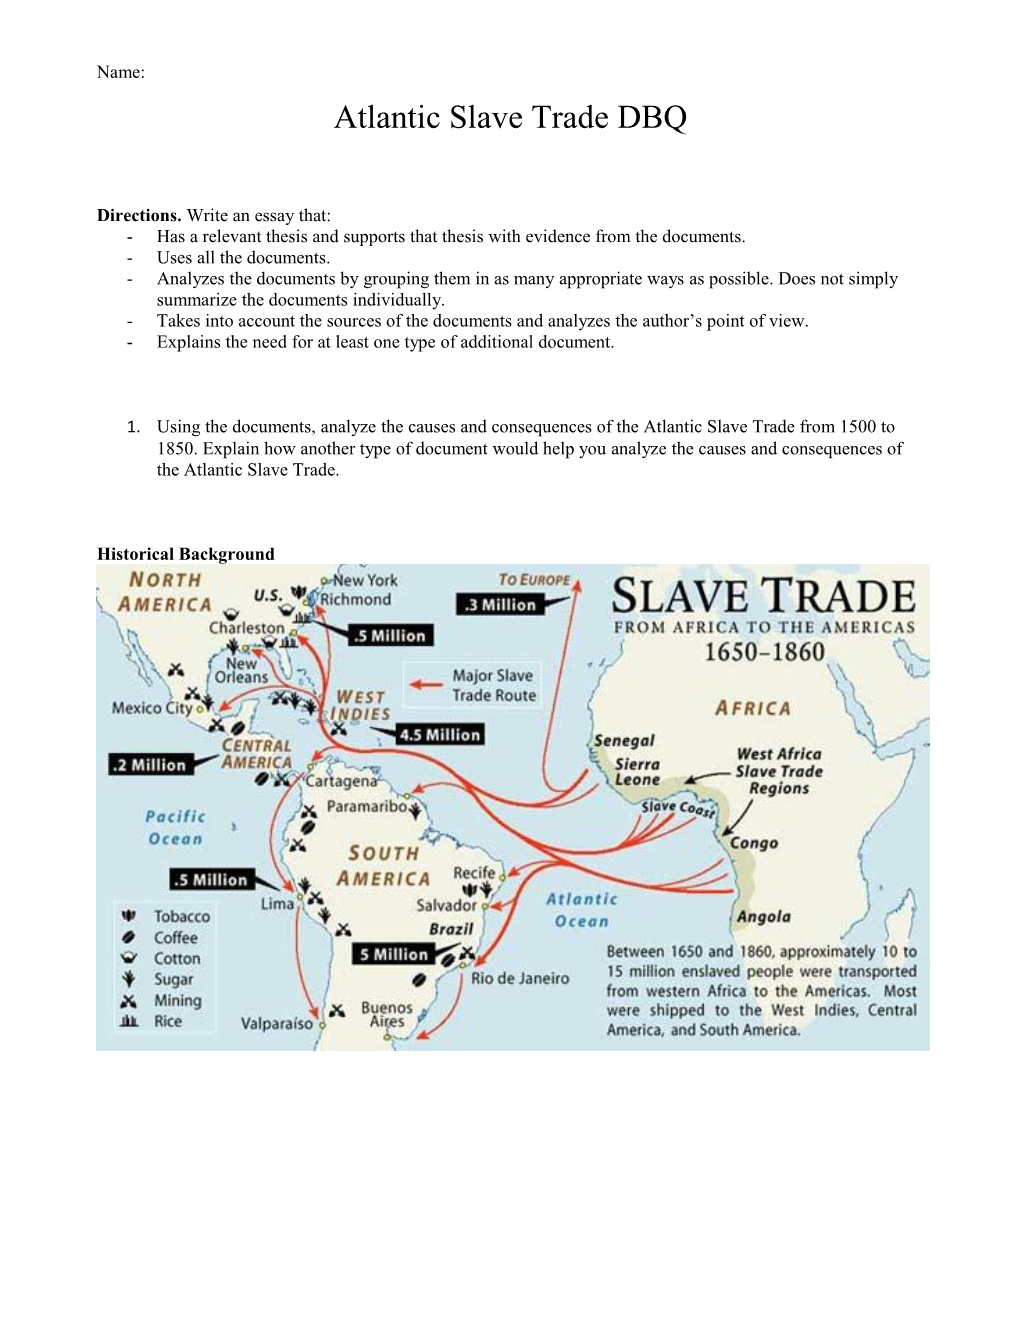 Atlantic Slave Trade DBQ